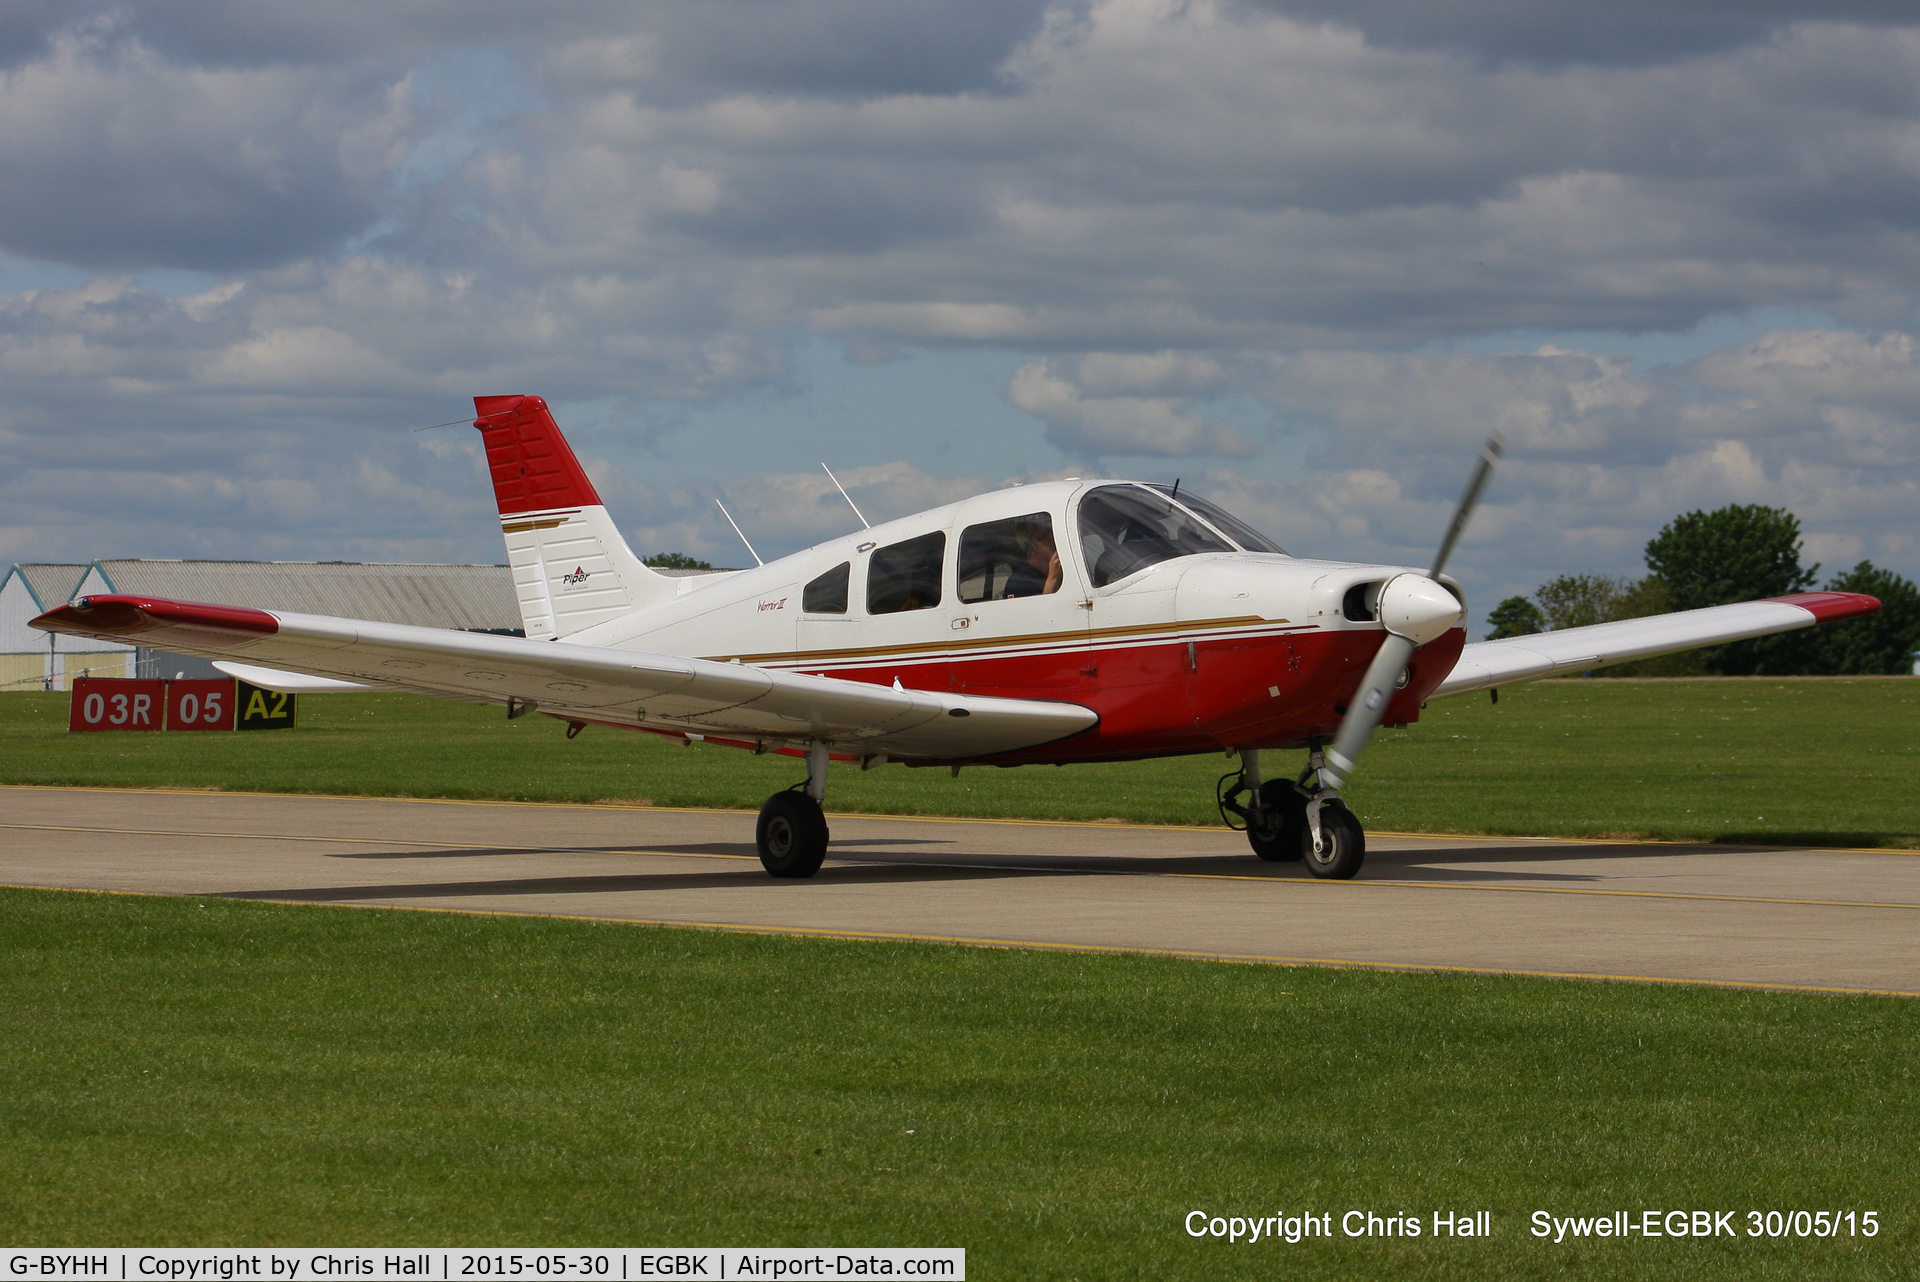 G-BYHH, 1999 Piper PA-28-161 Warrior III C/N 2842050, at Aeroexpo 2015